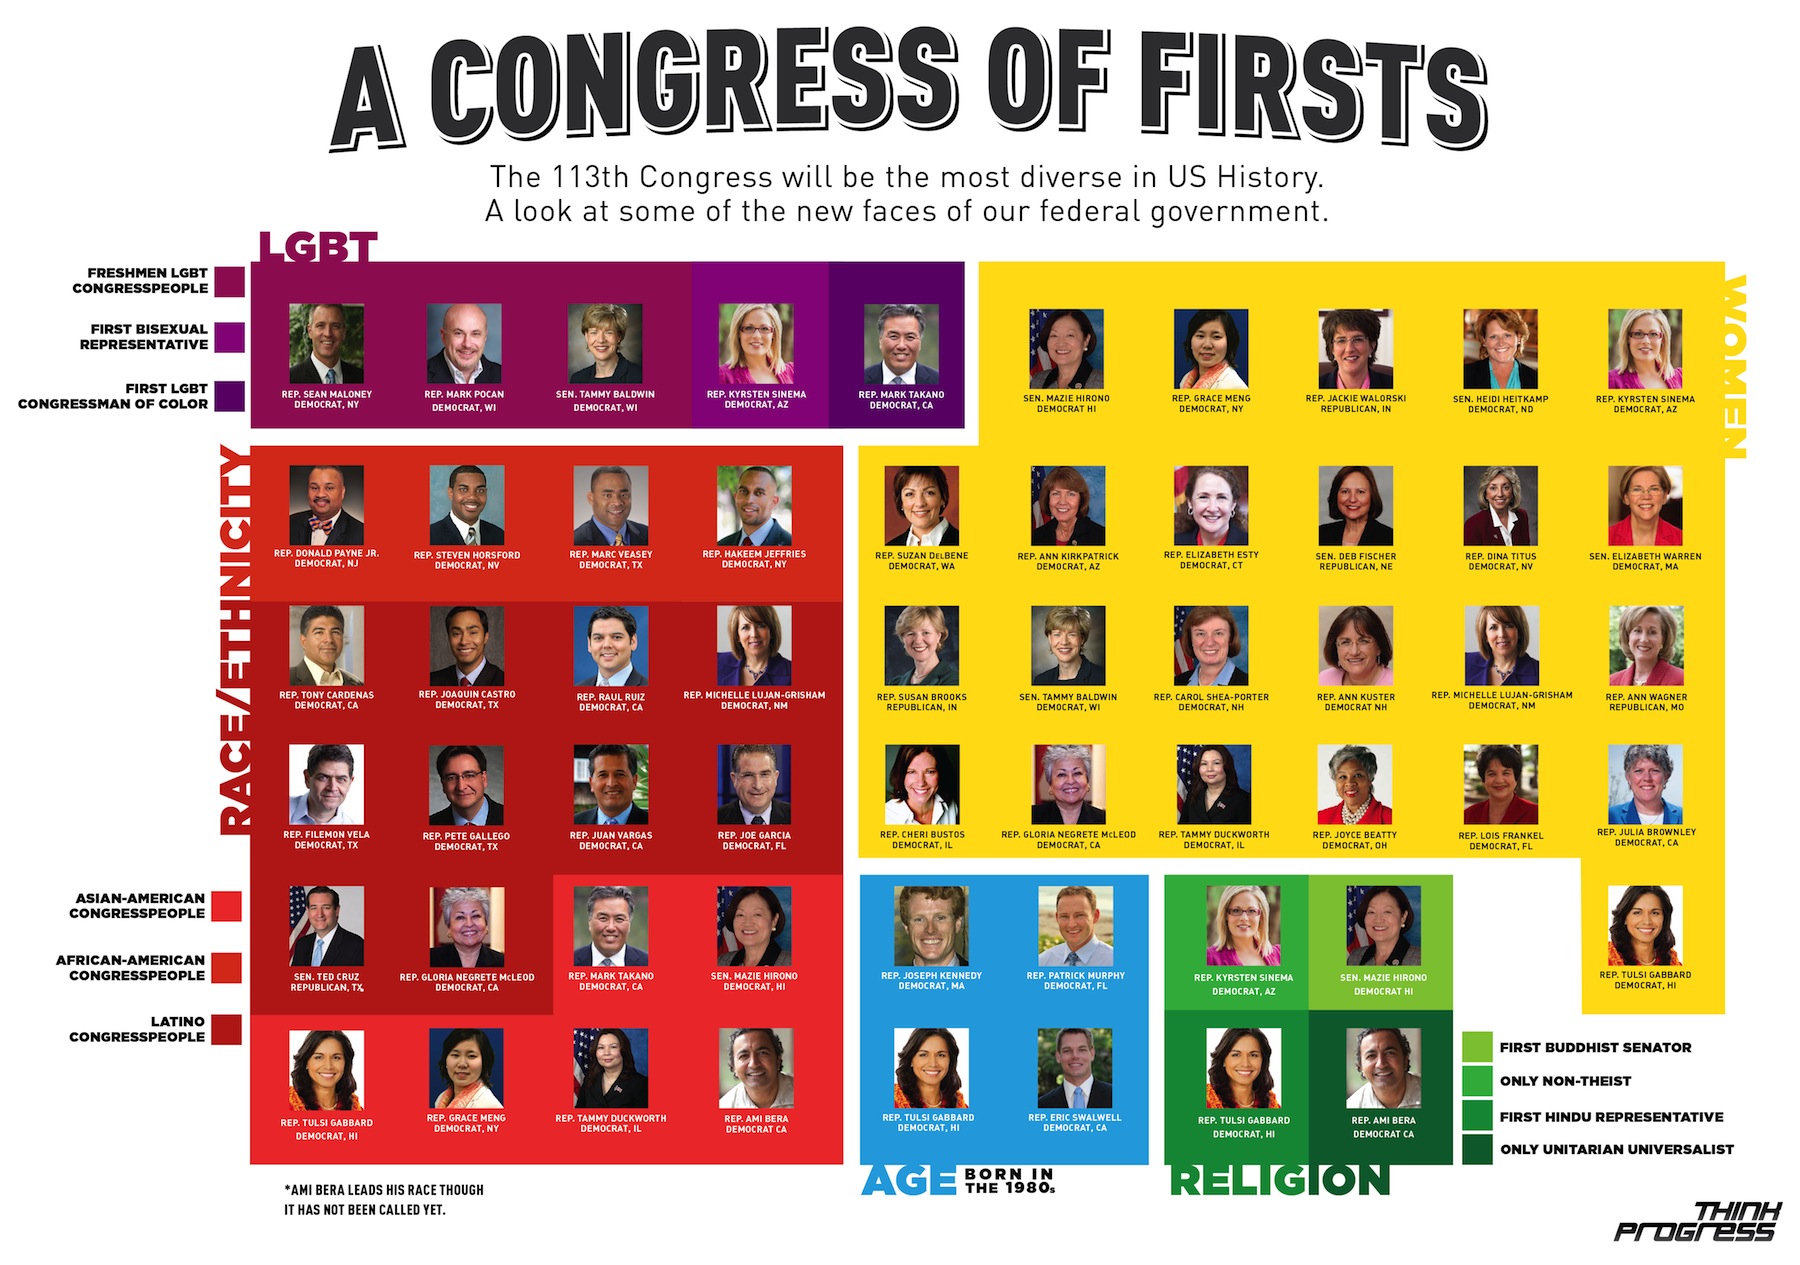 Religious Diversity in Congress